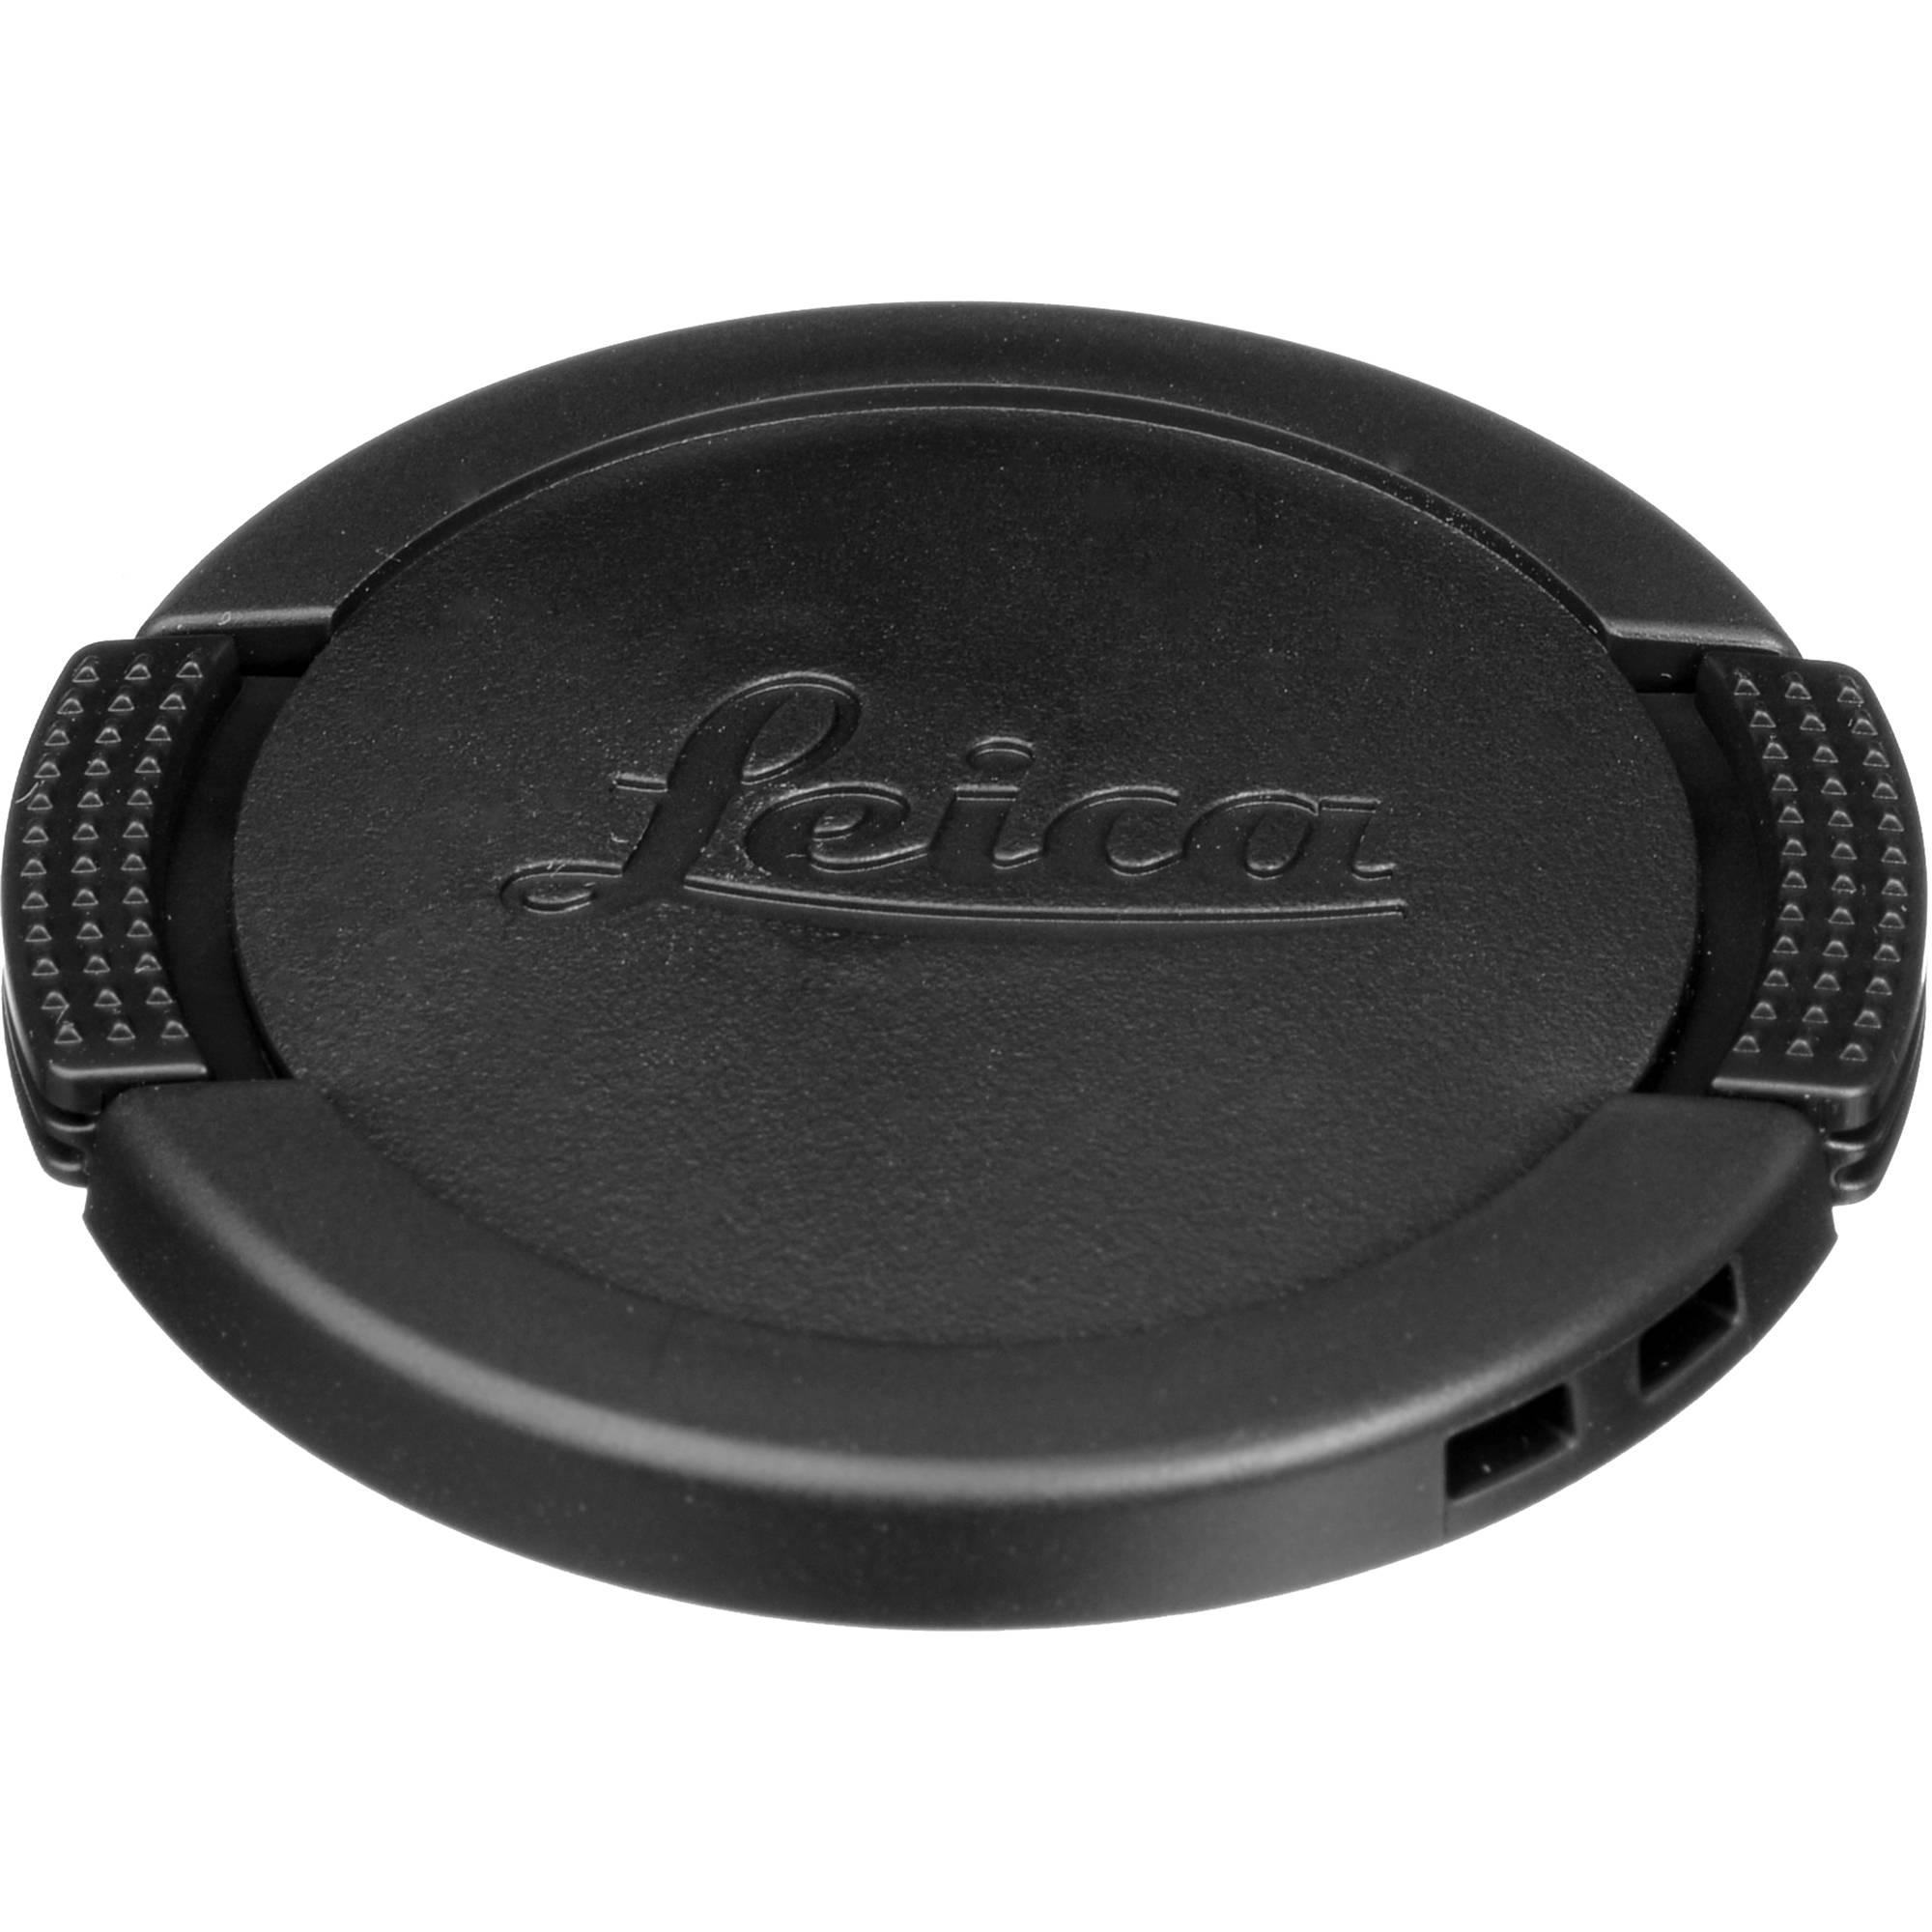 Leica Lens Cap For X Vario Type 107 423 107 001 024 B H Photo